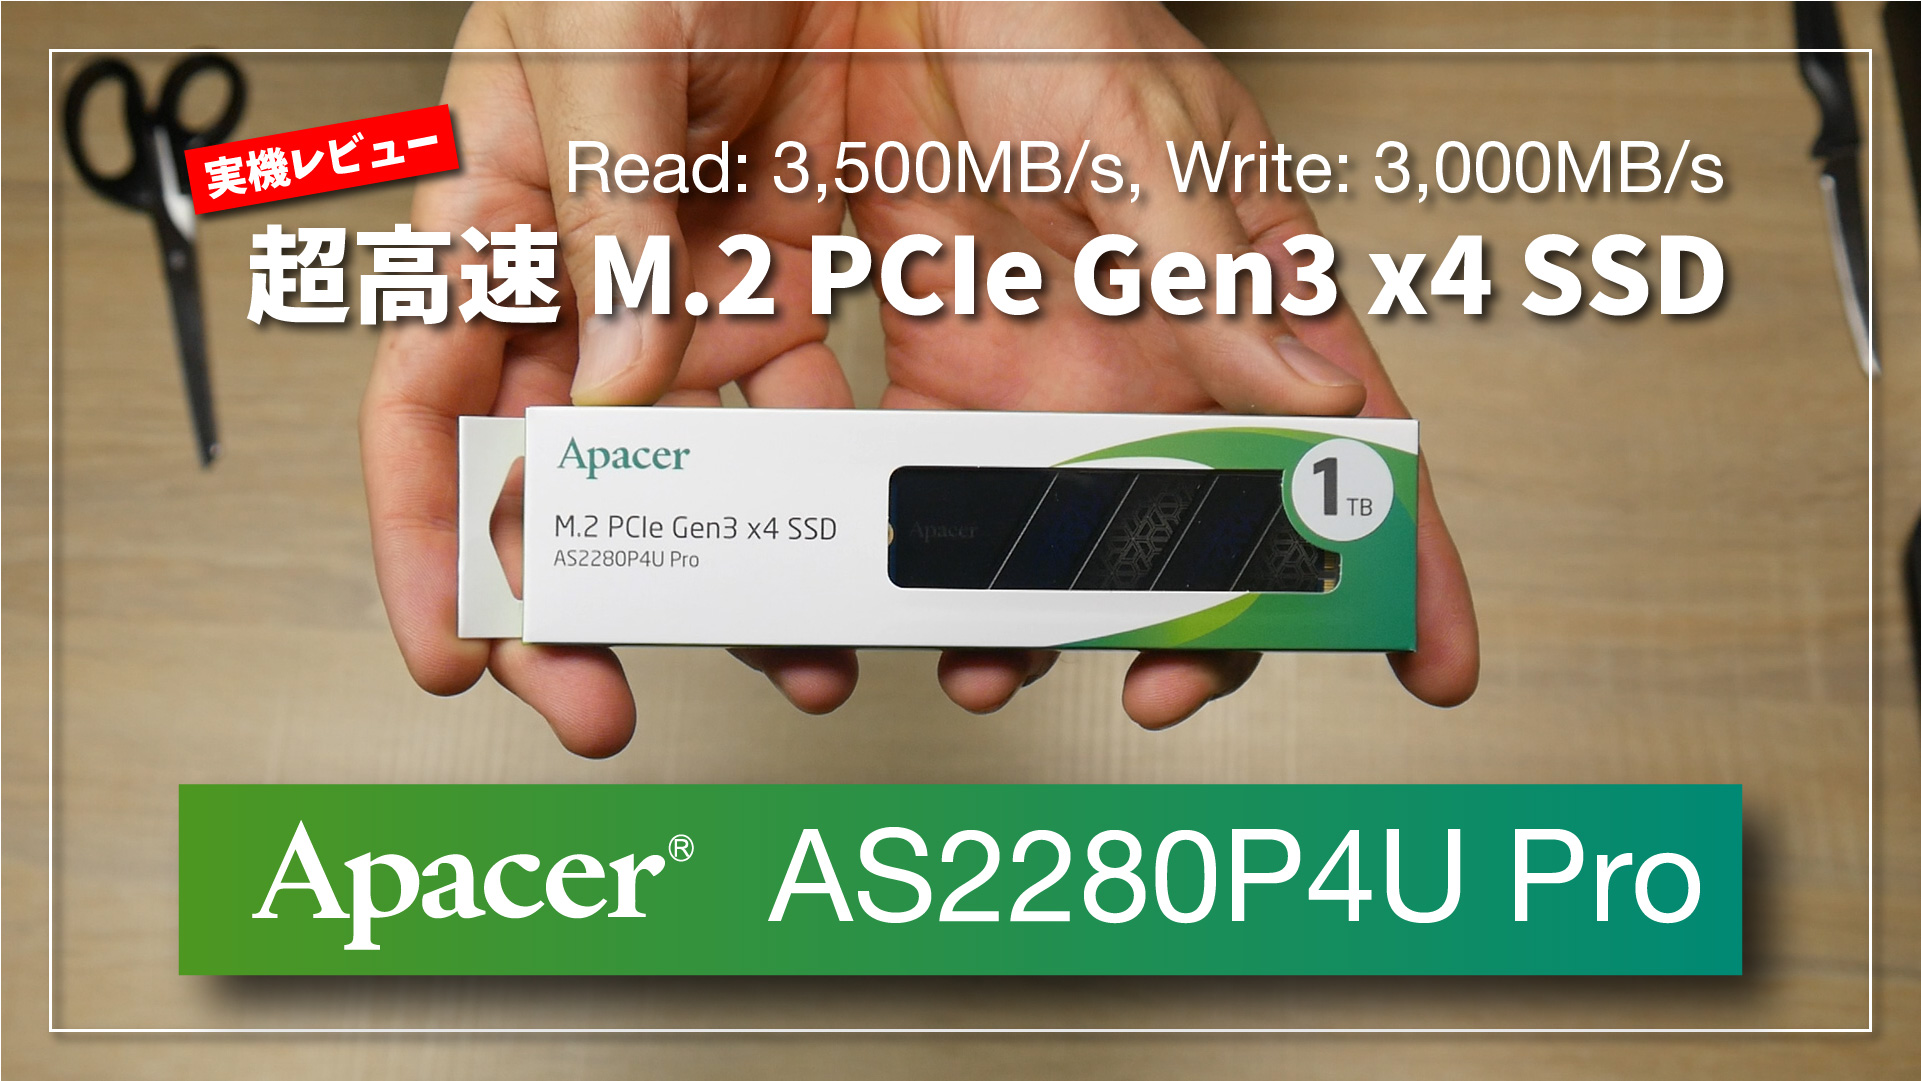 【実機レビュー】Apacer AS2280P4U Pro 超高速 M.2 PCIe Gen3 x4 SSD